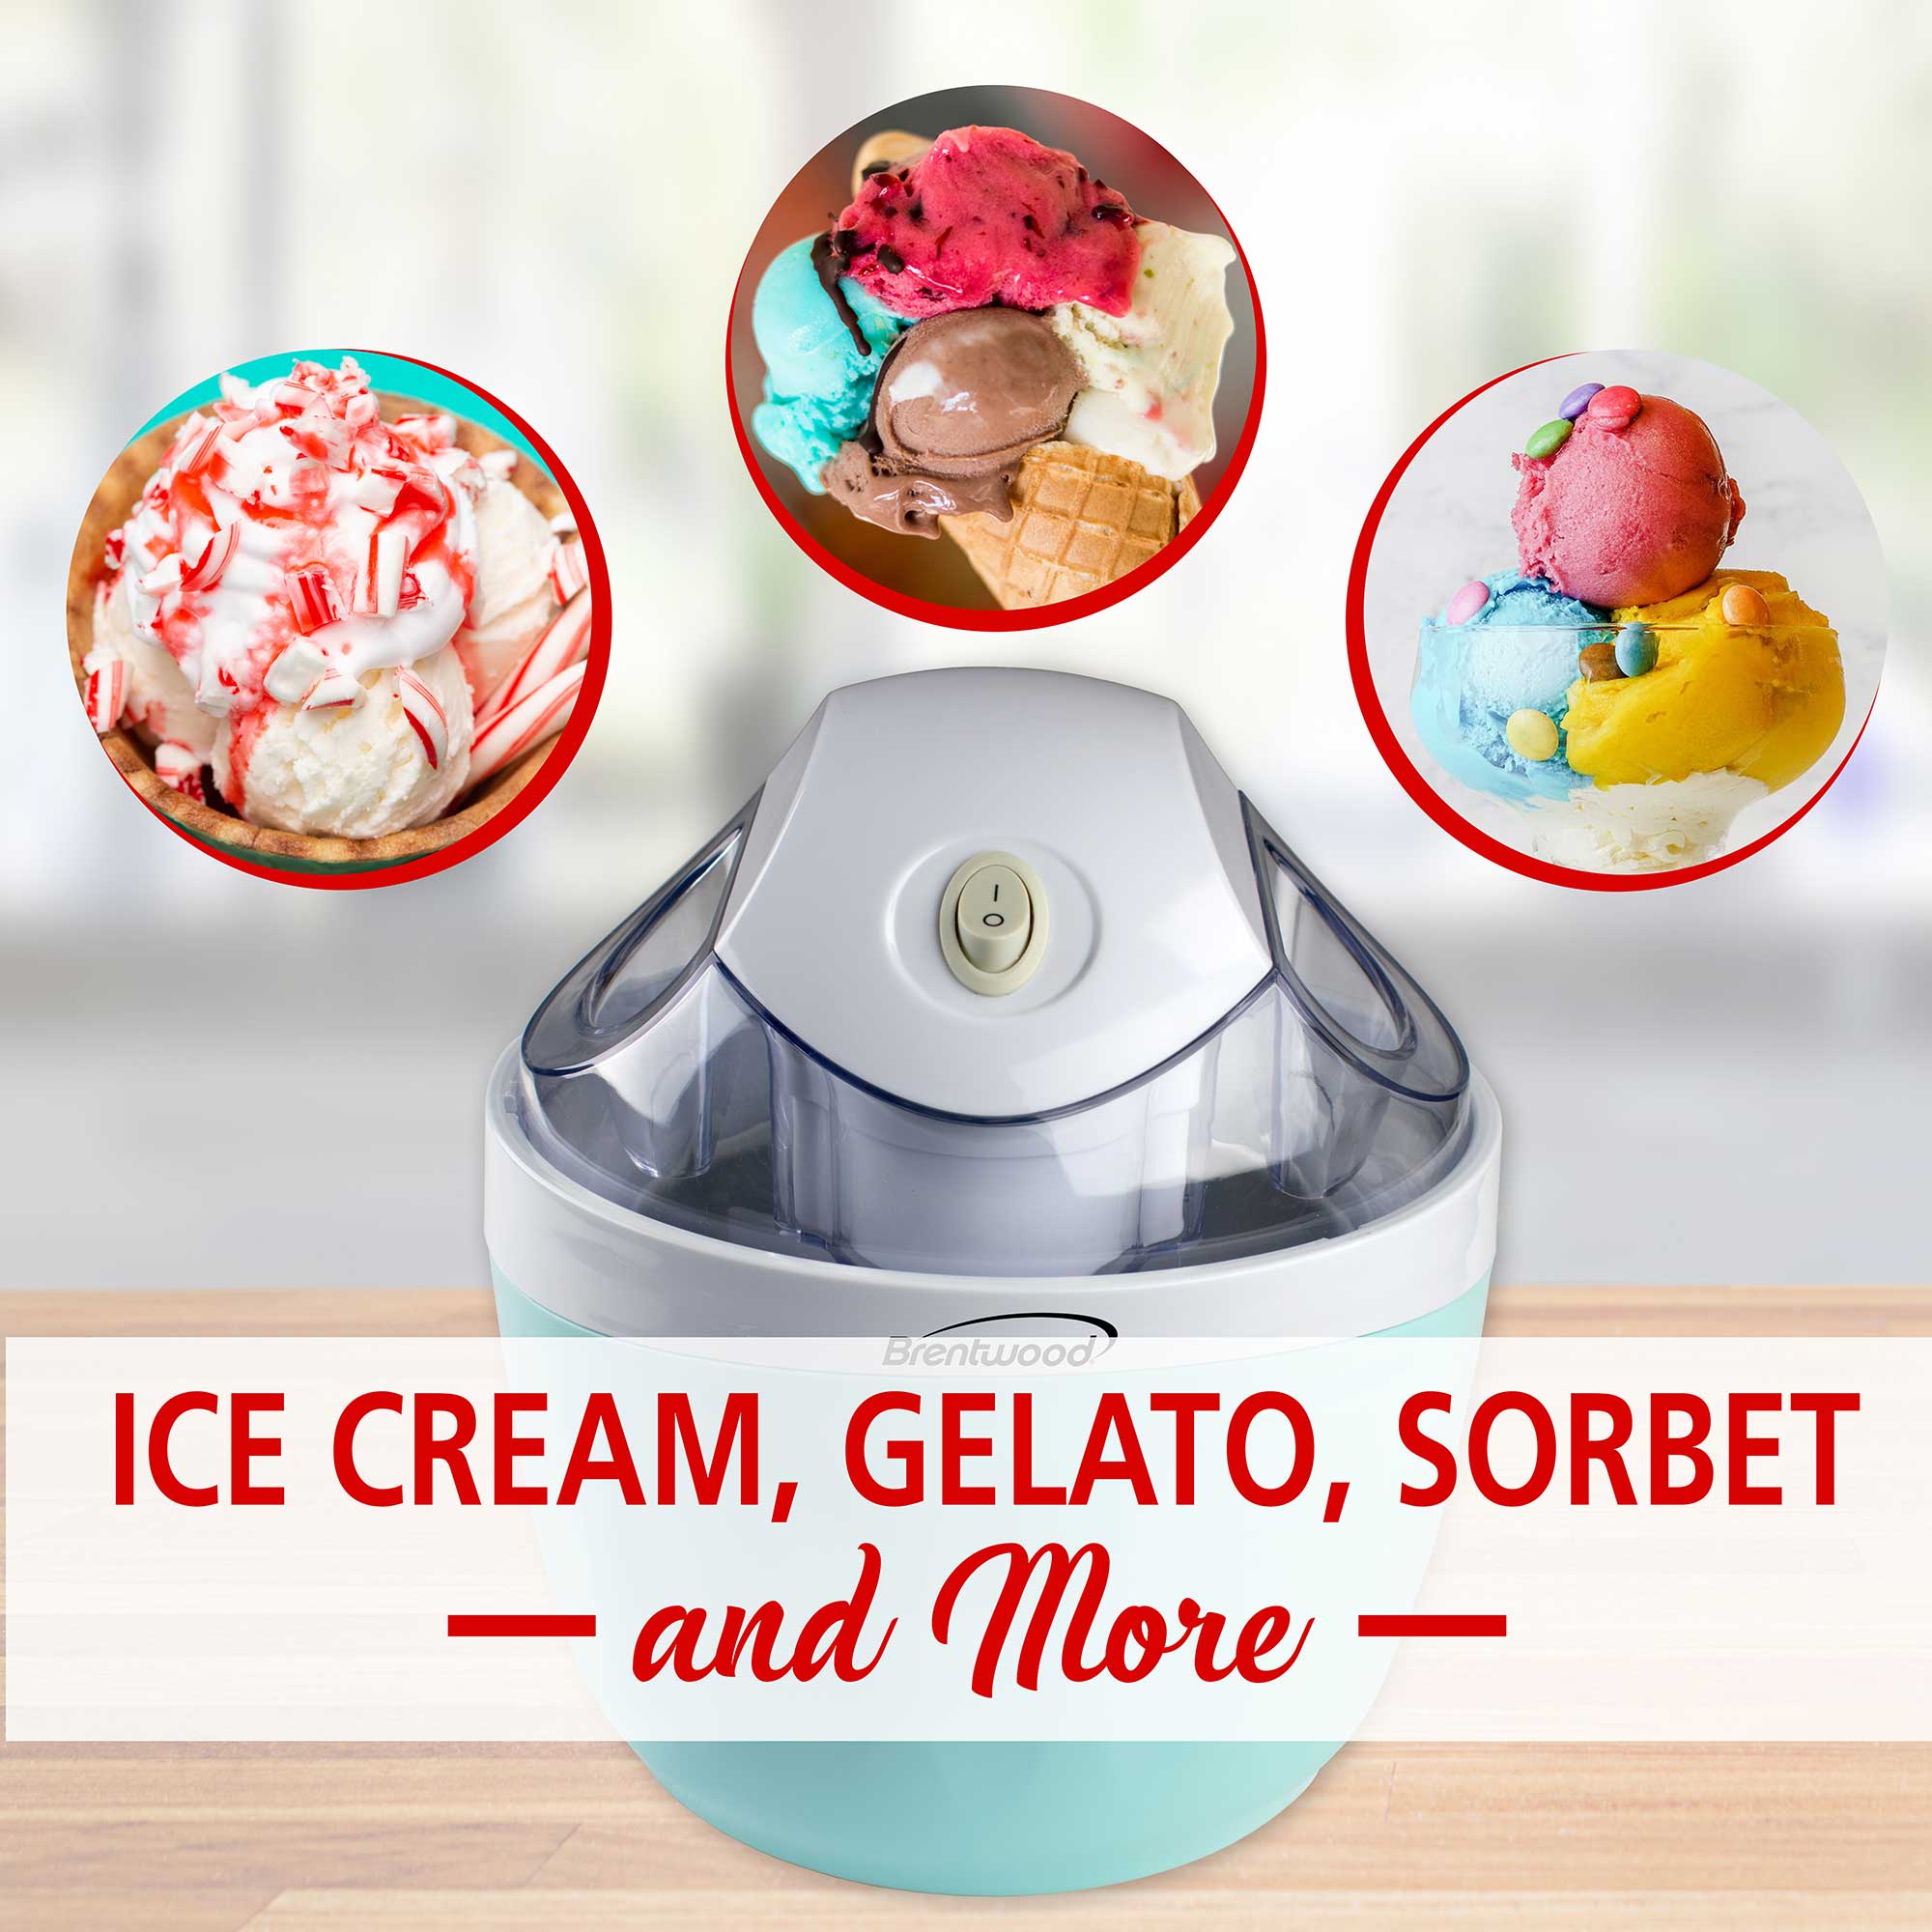 Brentwood TS-1410BL 1 Quart Ice Cream and Sorbet Maker, Frozen